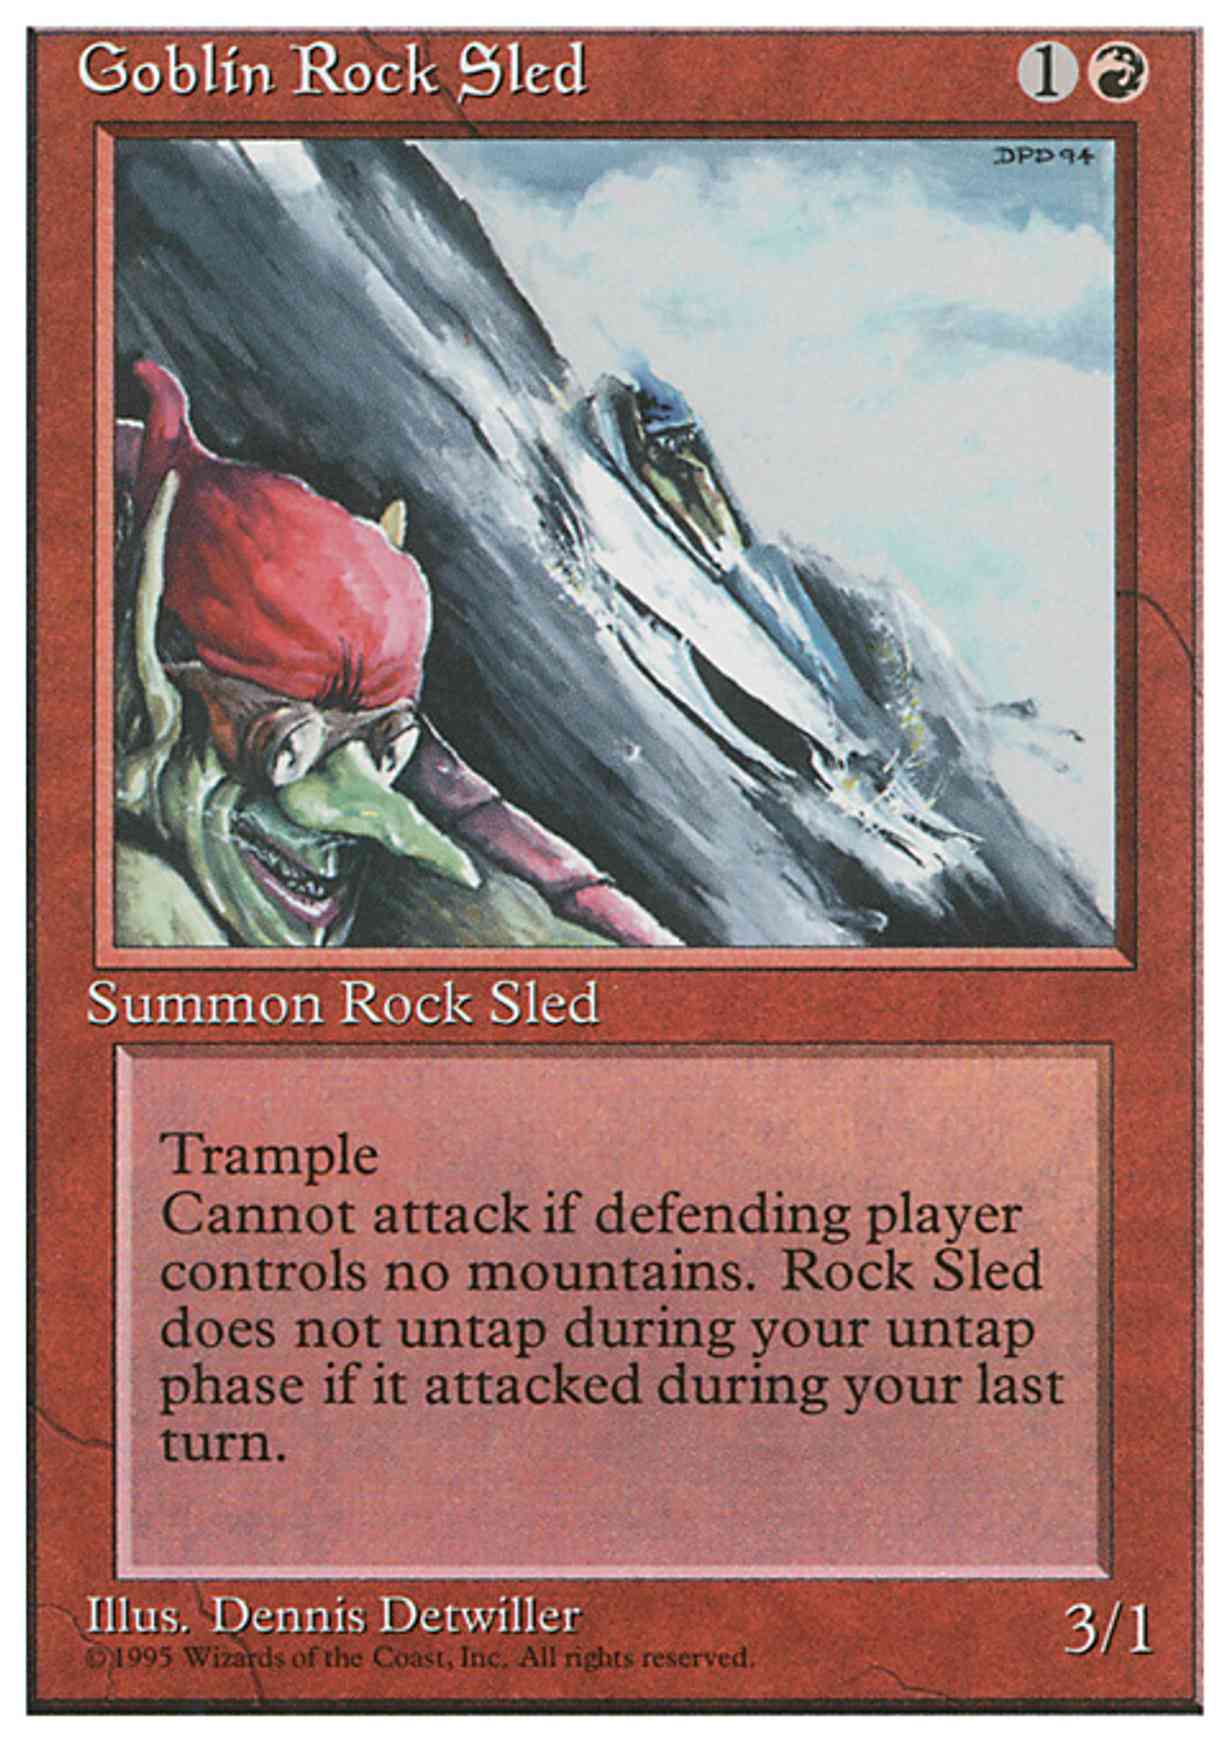 Goblin Rock Sled magic card front